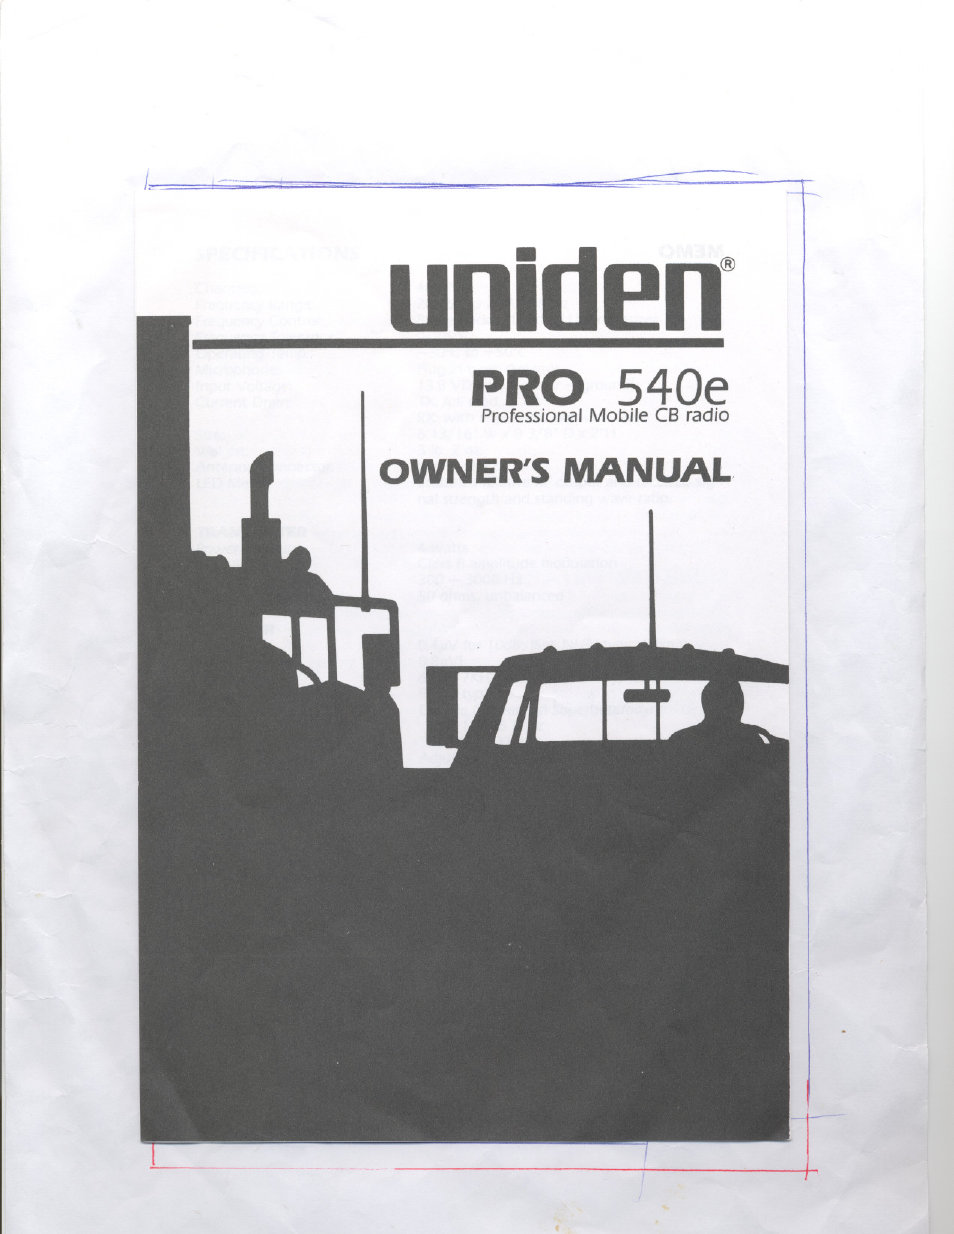 Uniden PRO 540e User Manual | 10 pages